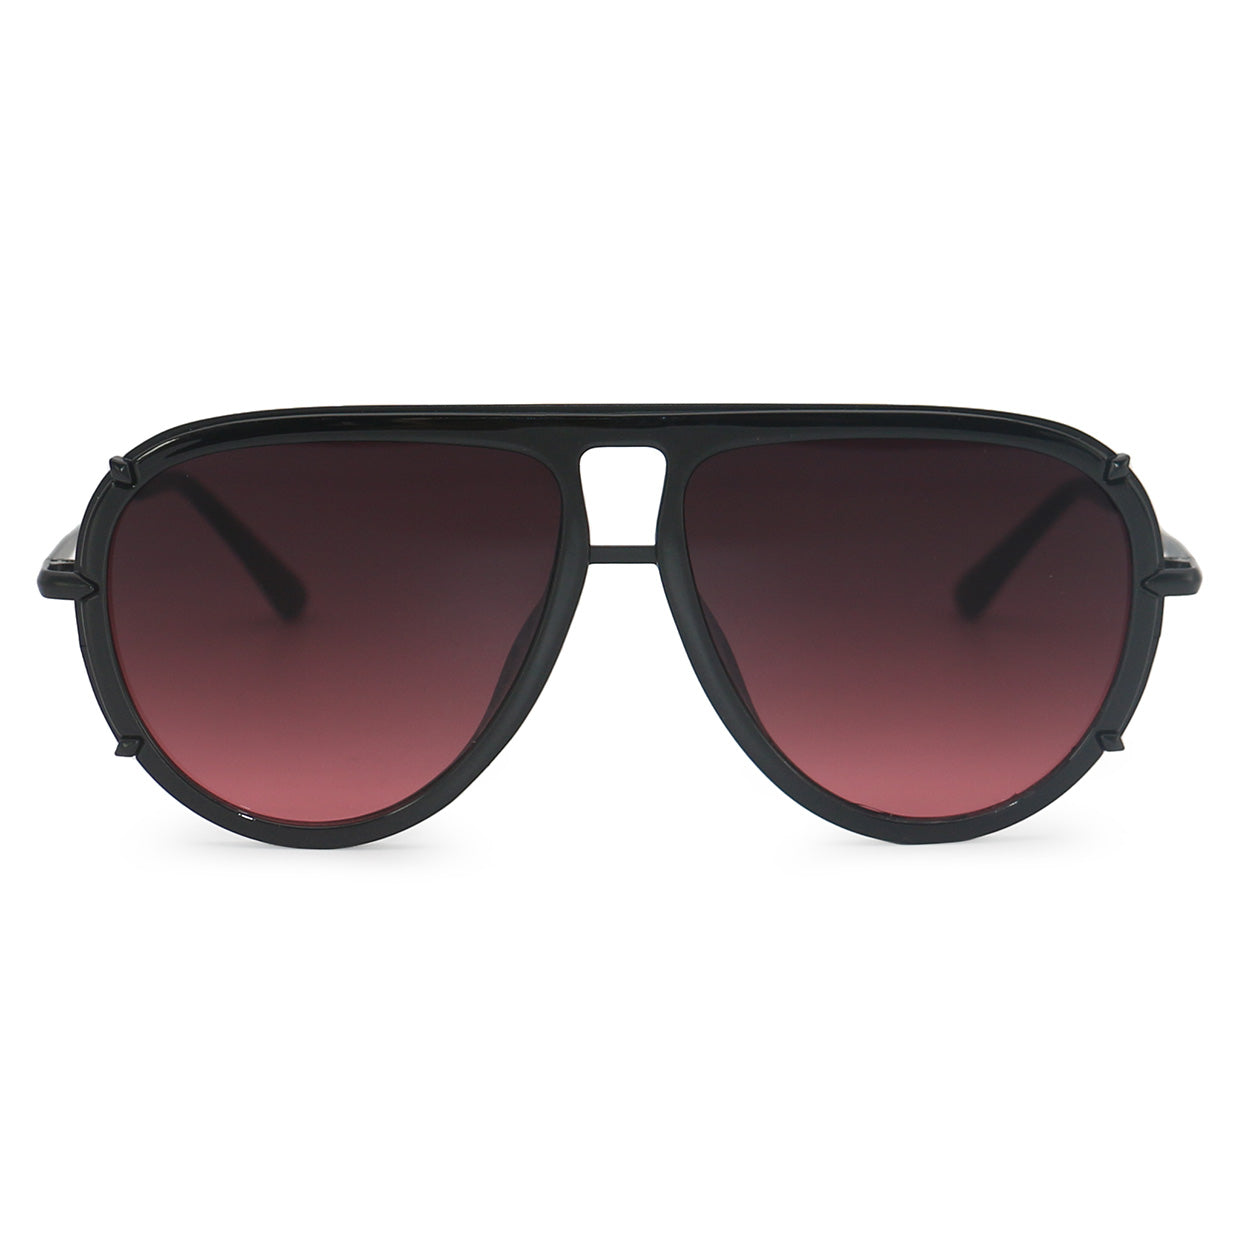 Small Aviators - Round Aviators - Comfortable Sunglasses